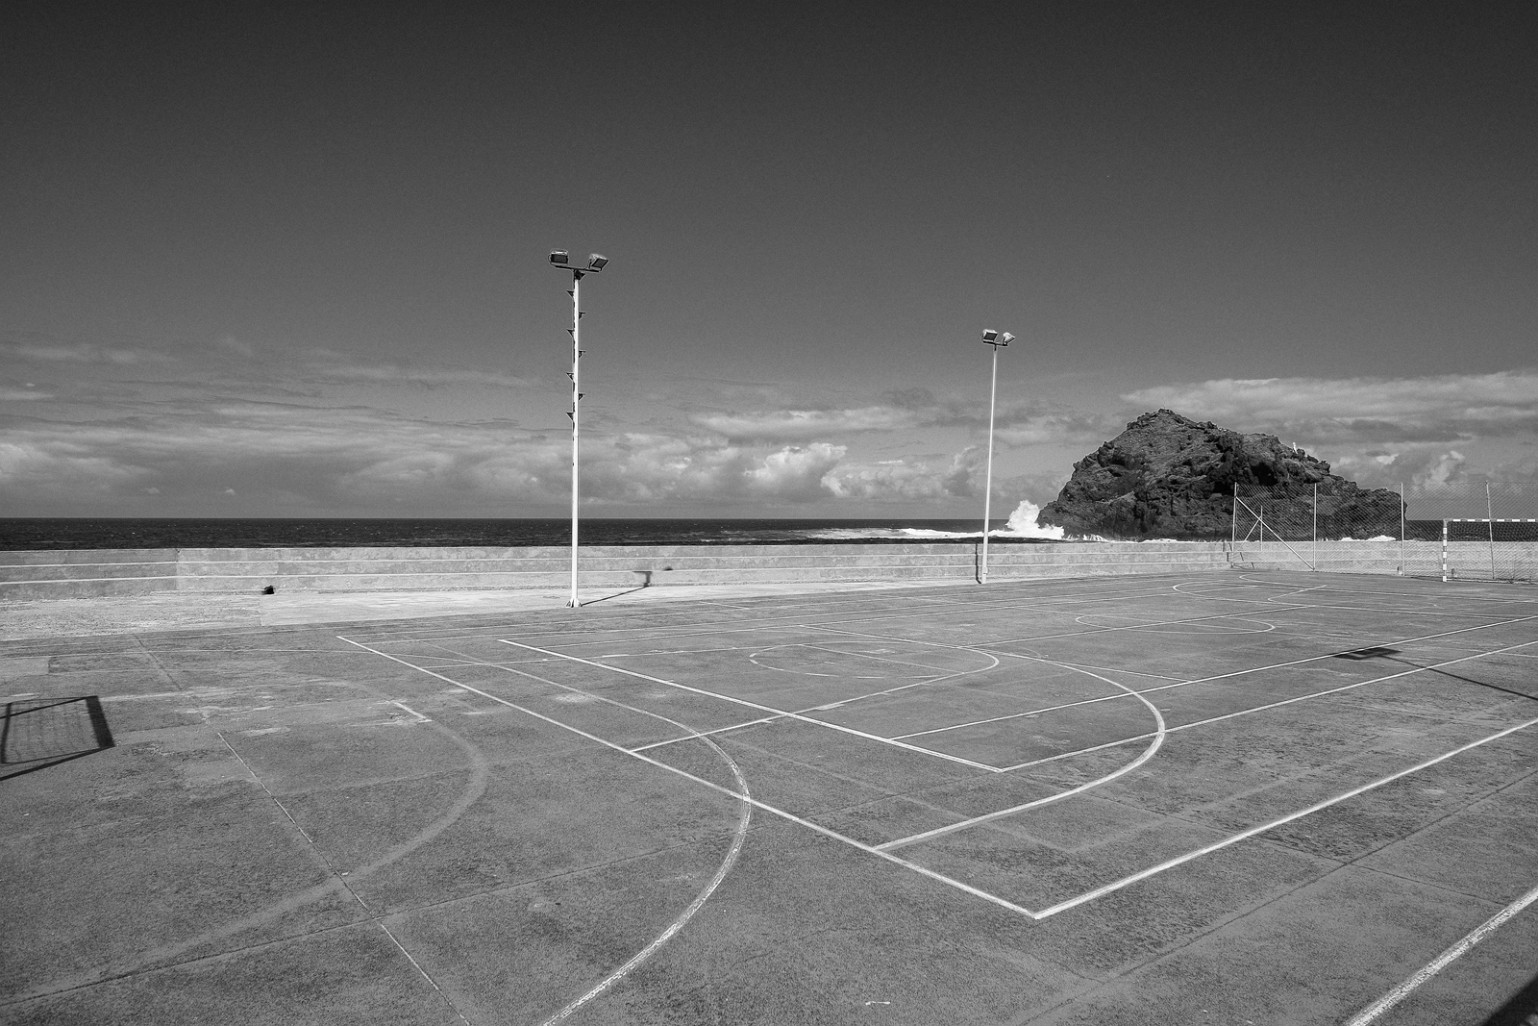 St_Garachico-Sportplatz_009_Tenerife_14mm_X-E1_LR52_sRGB_16bit_web